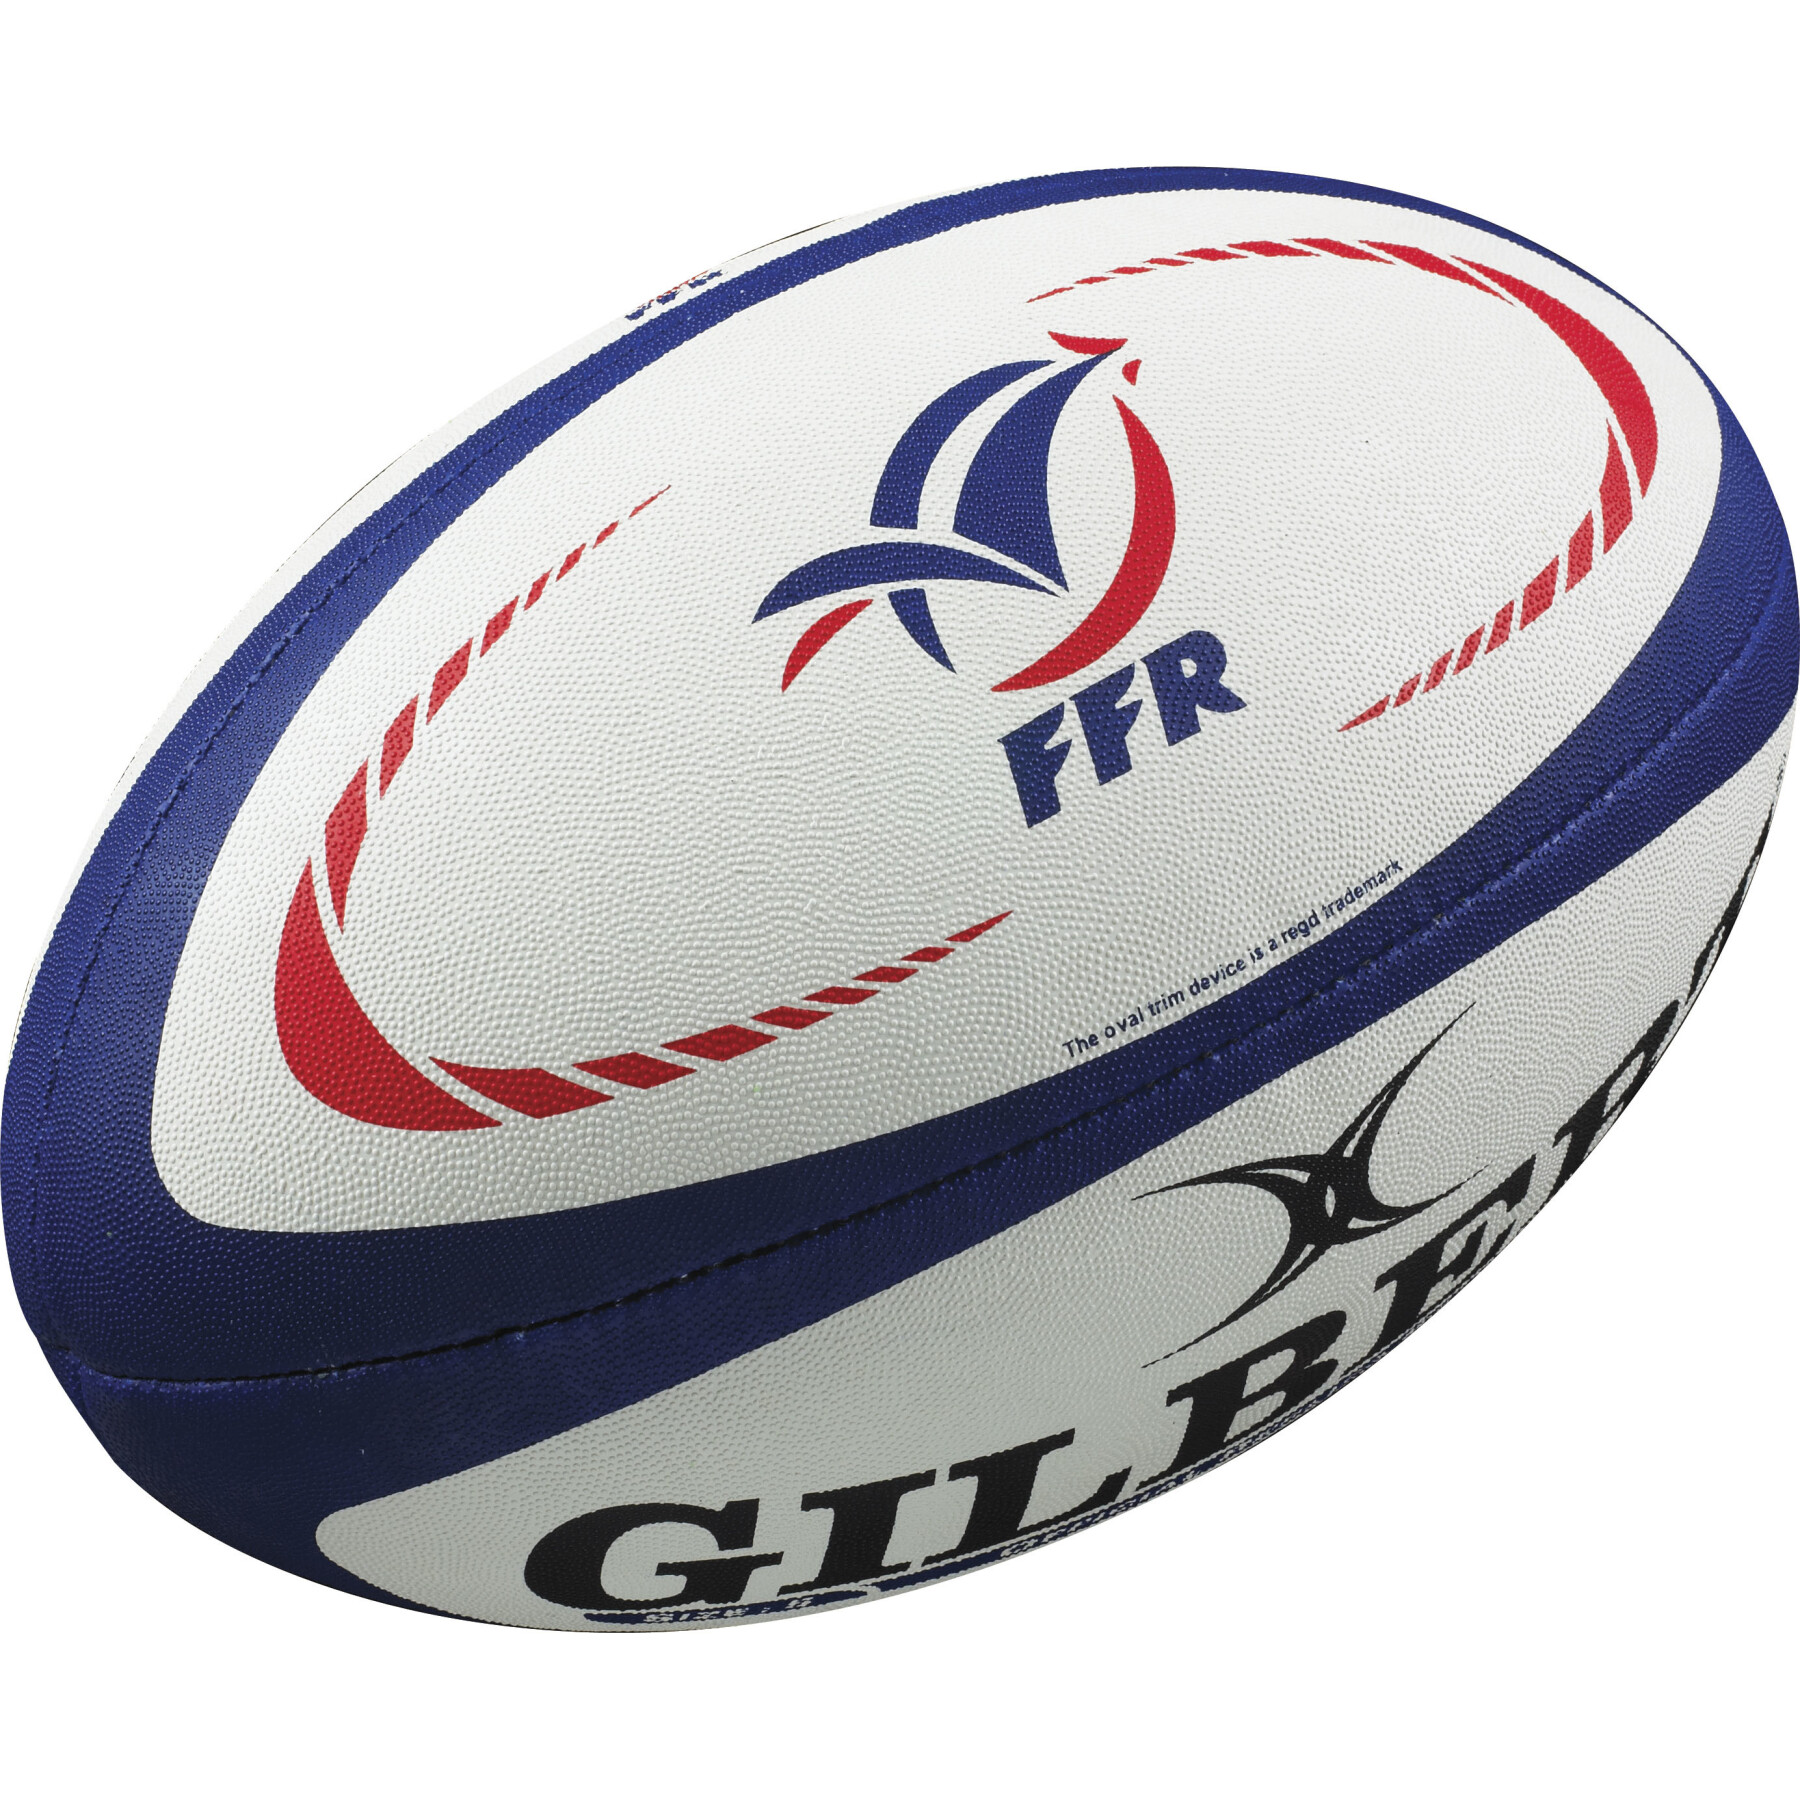 Rugbybal replica Gilbert France (maat 5)